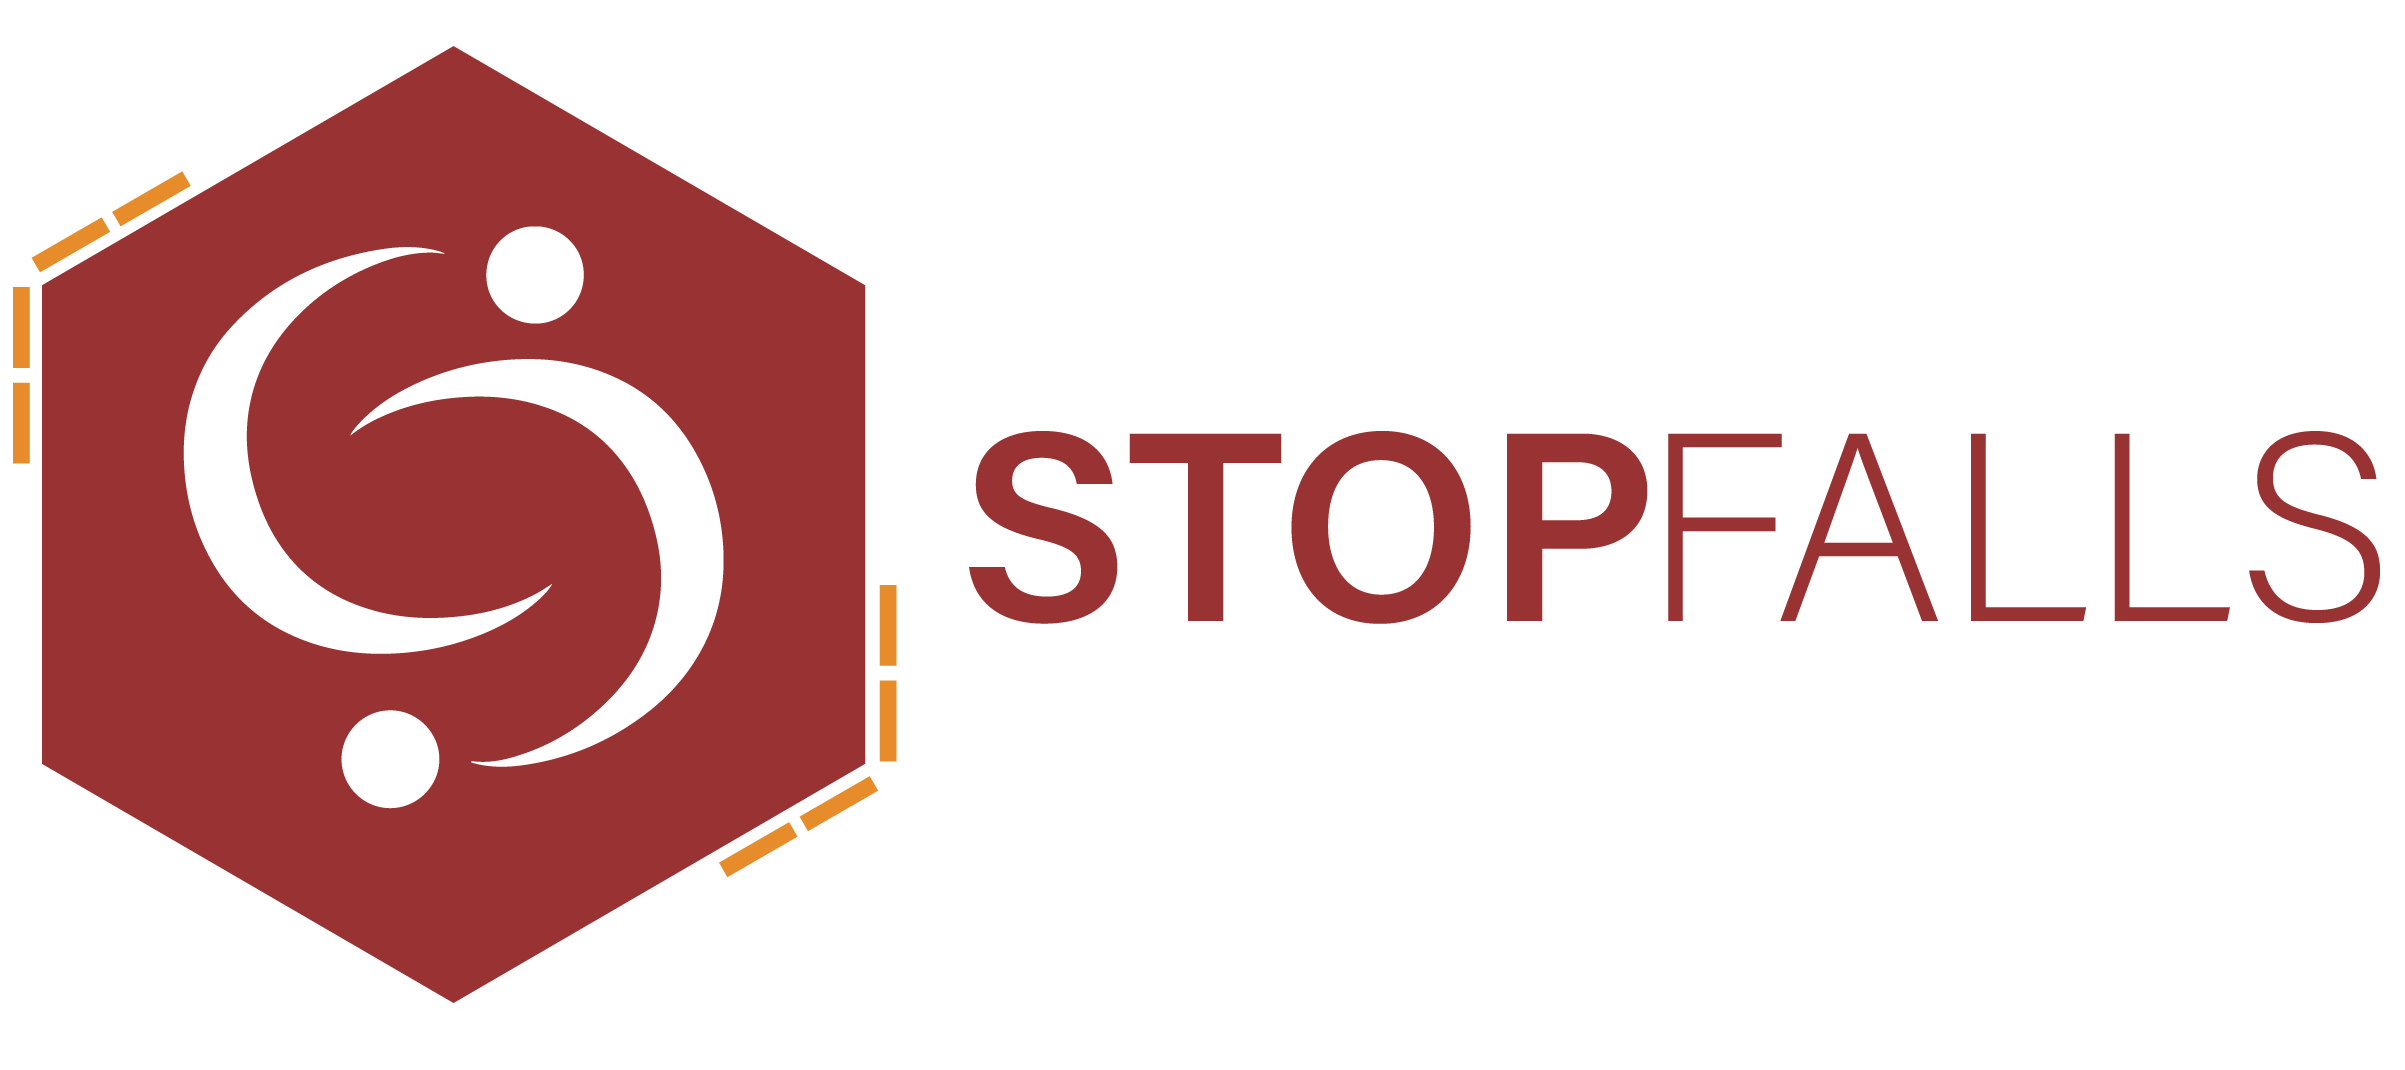 Cropped stopfalls logo horizontal full colour